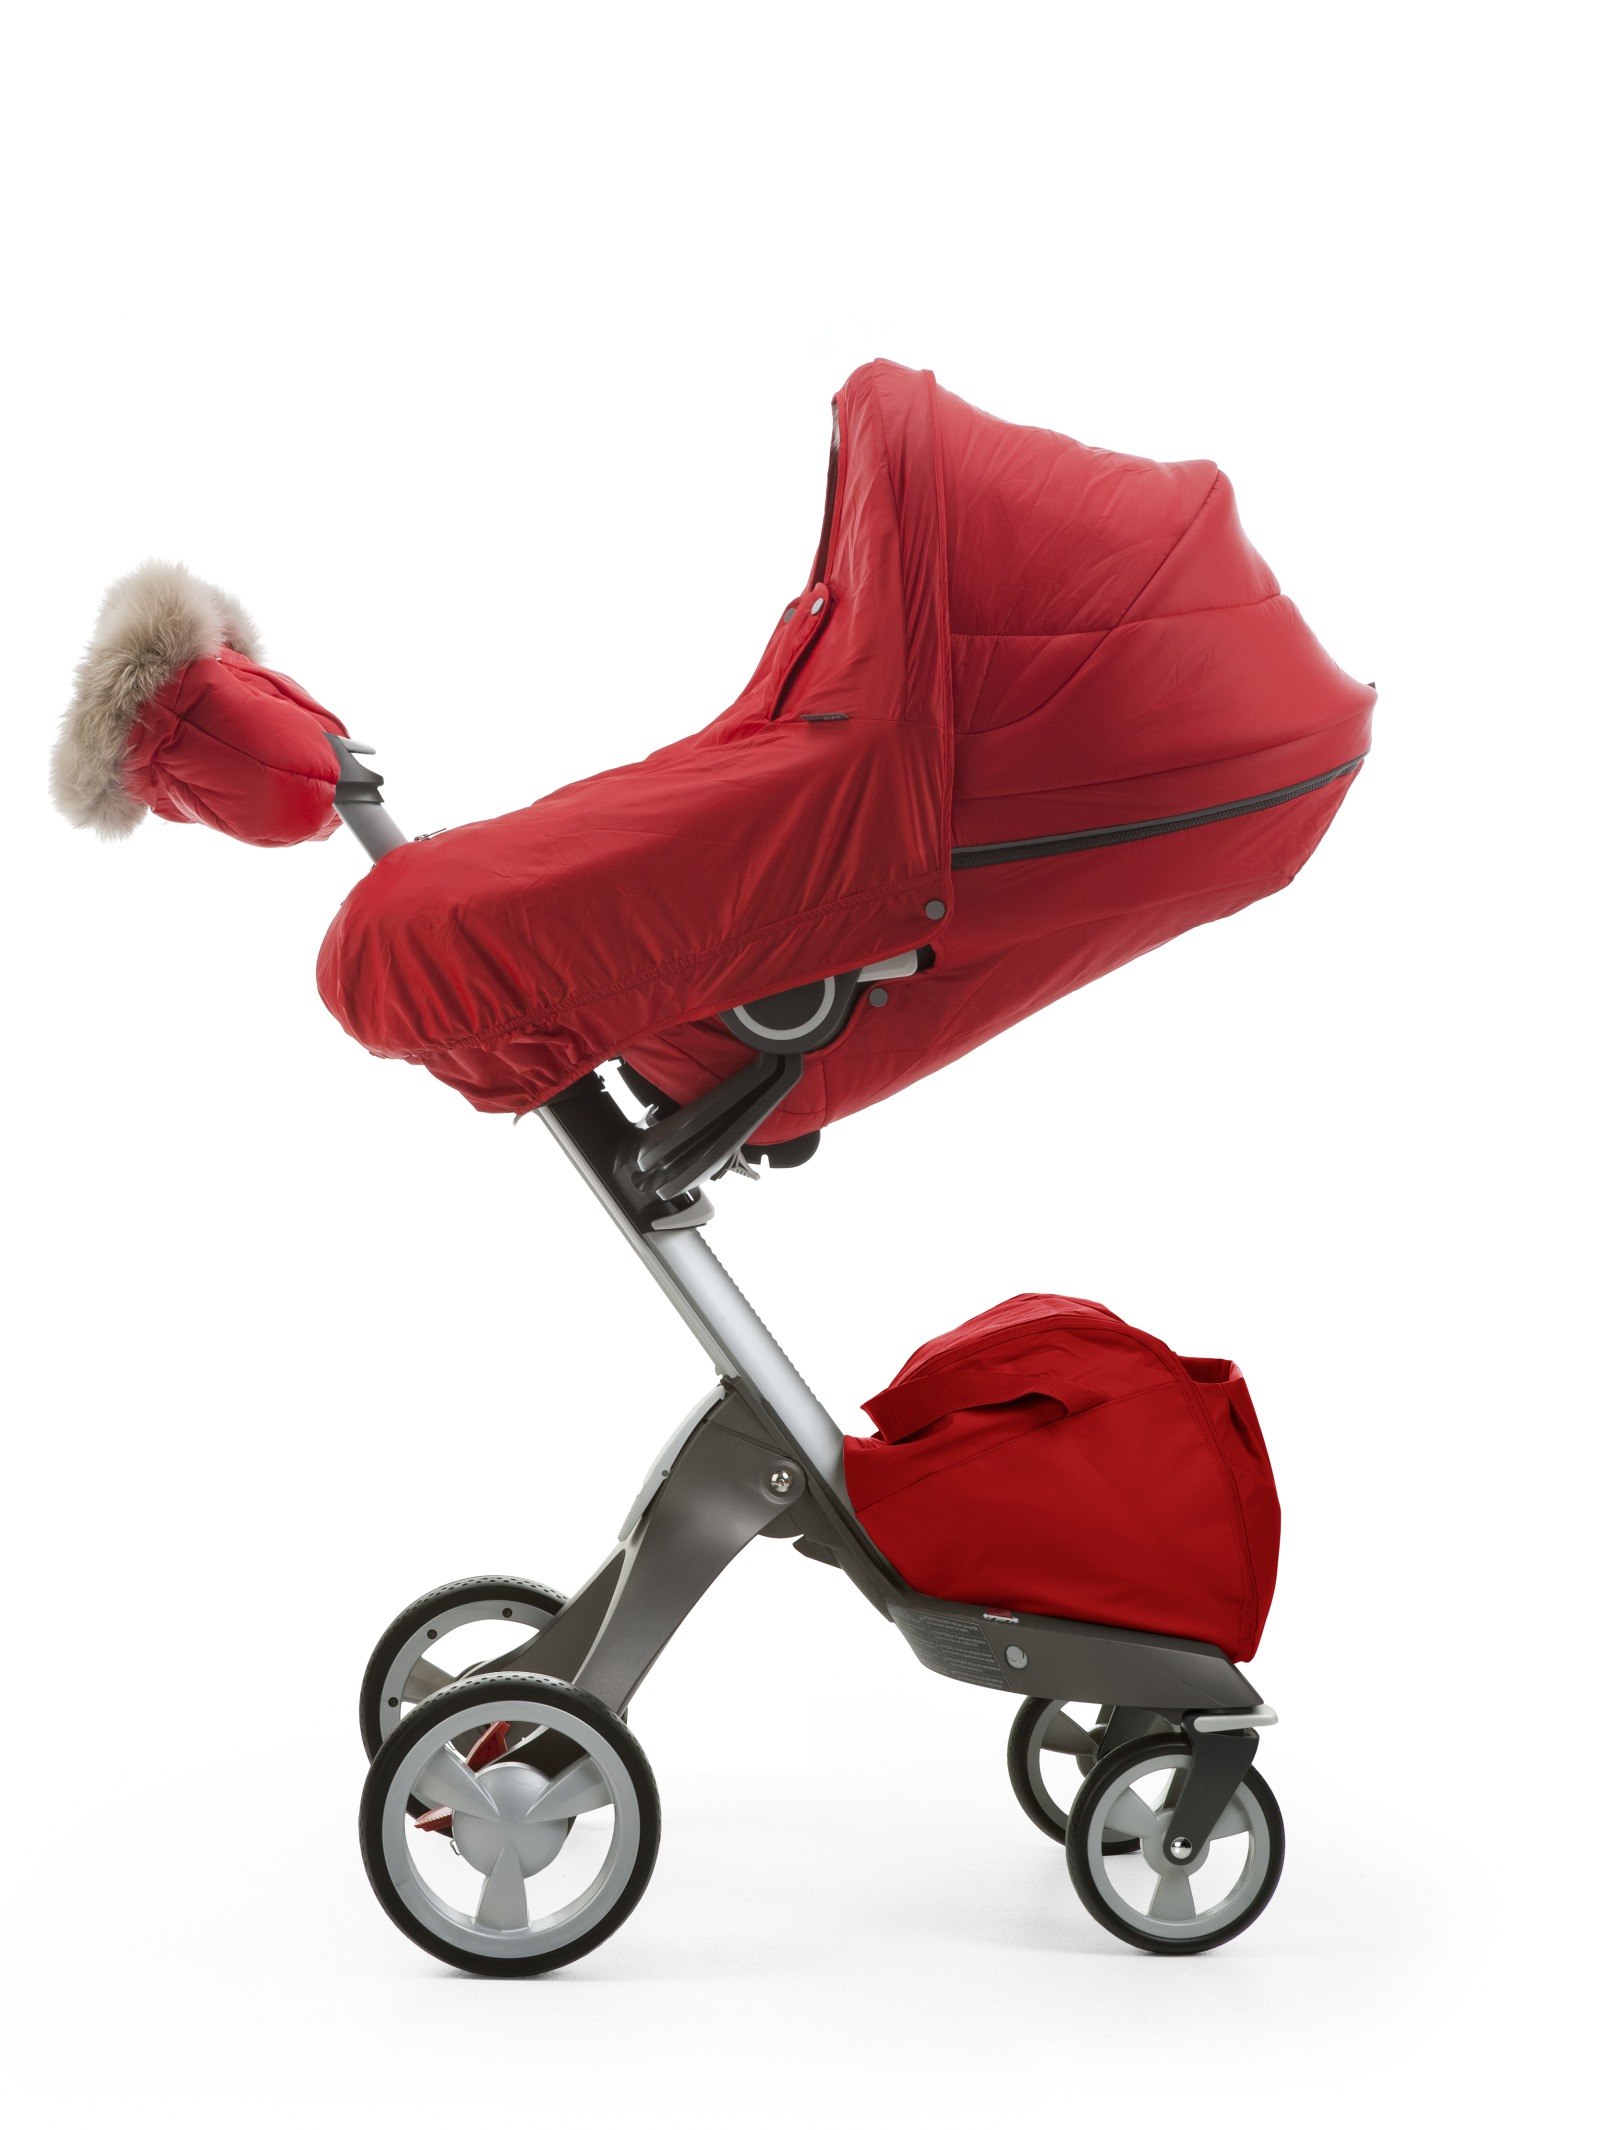 graco stroller system